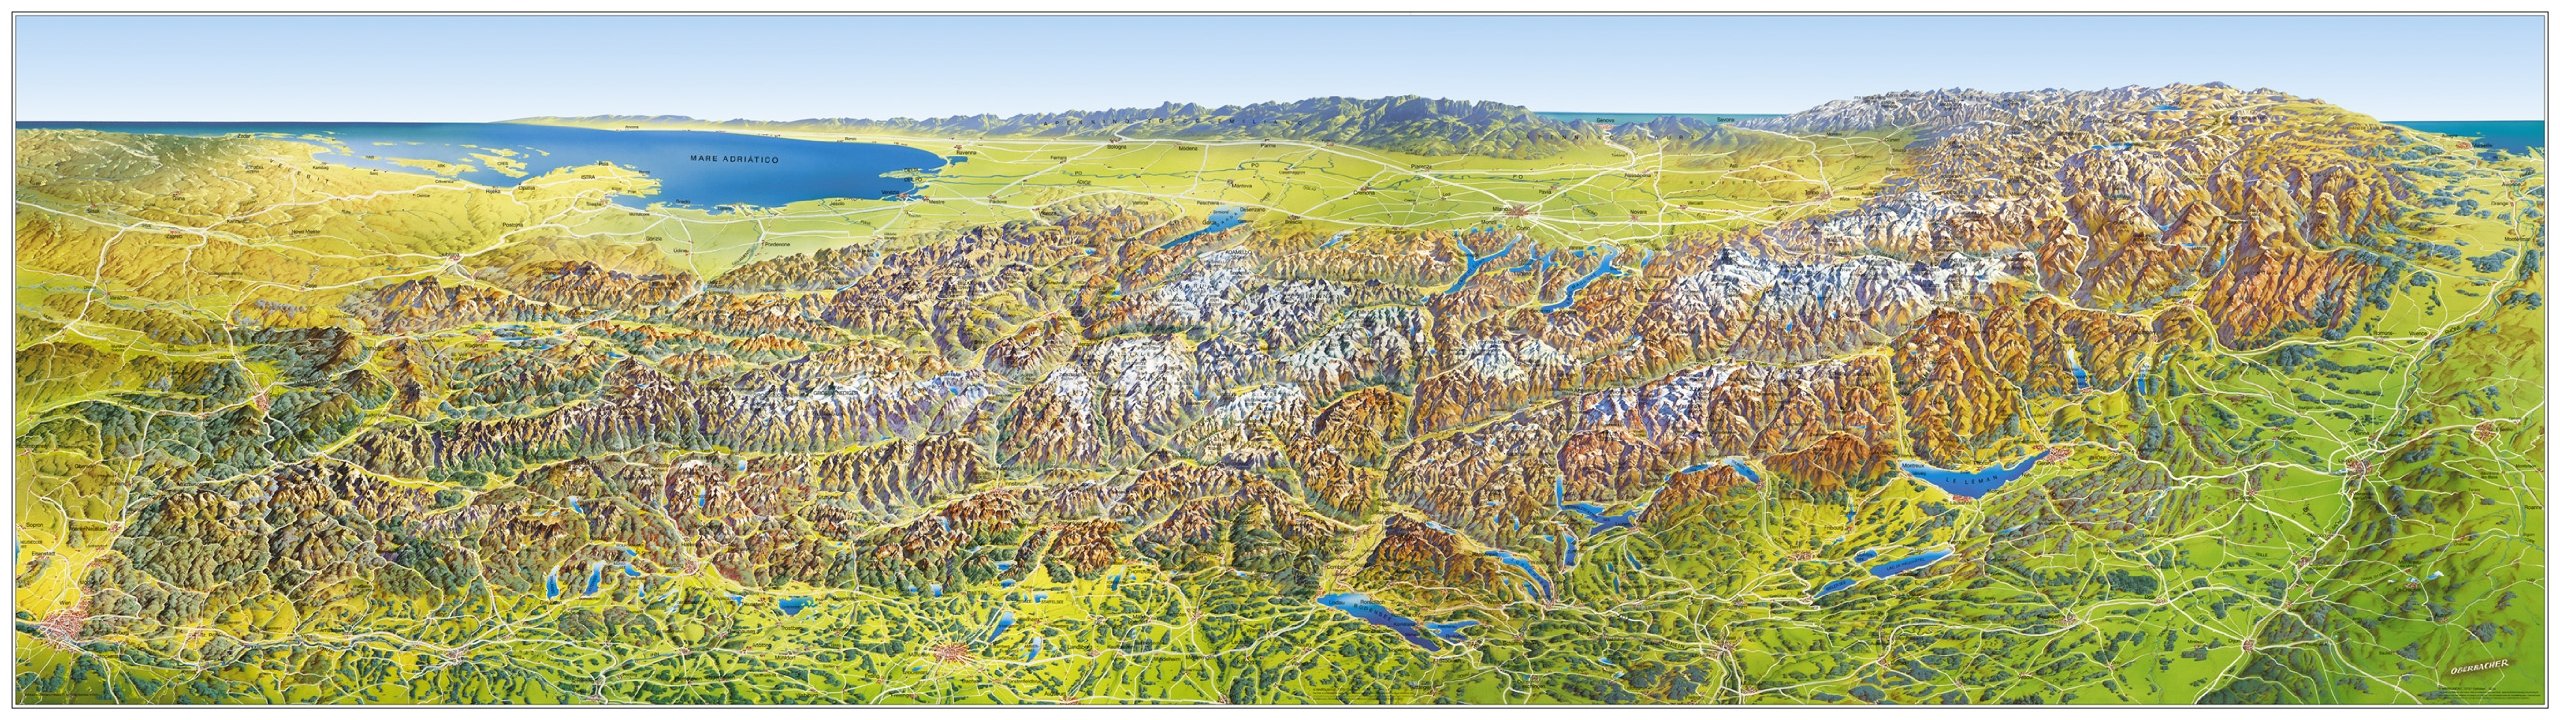 Online bestellen: Wandkaart Das Grosse Alpen - panorama, sommer / zomer uitgave | MairDumont